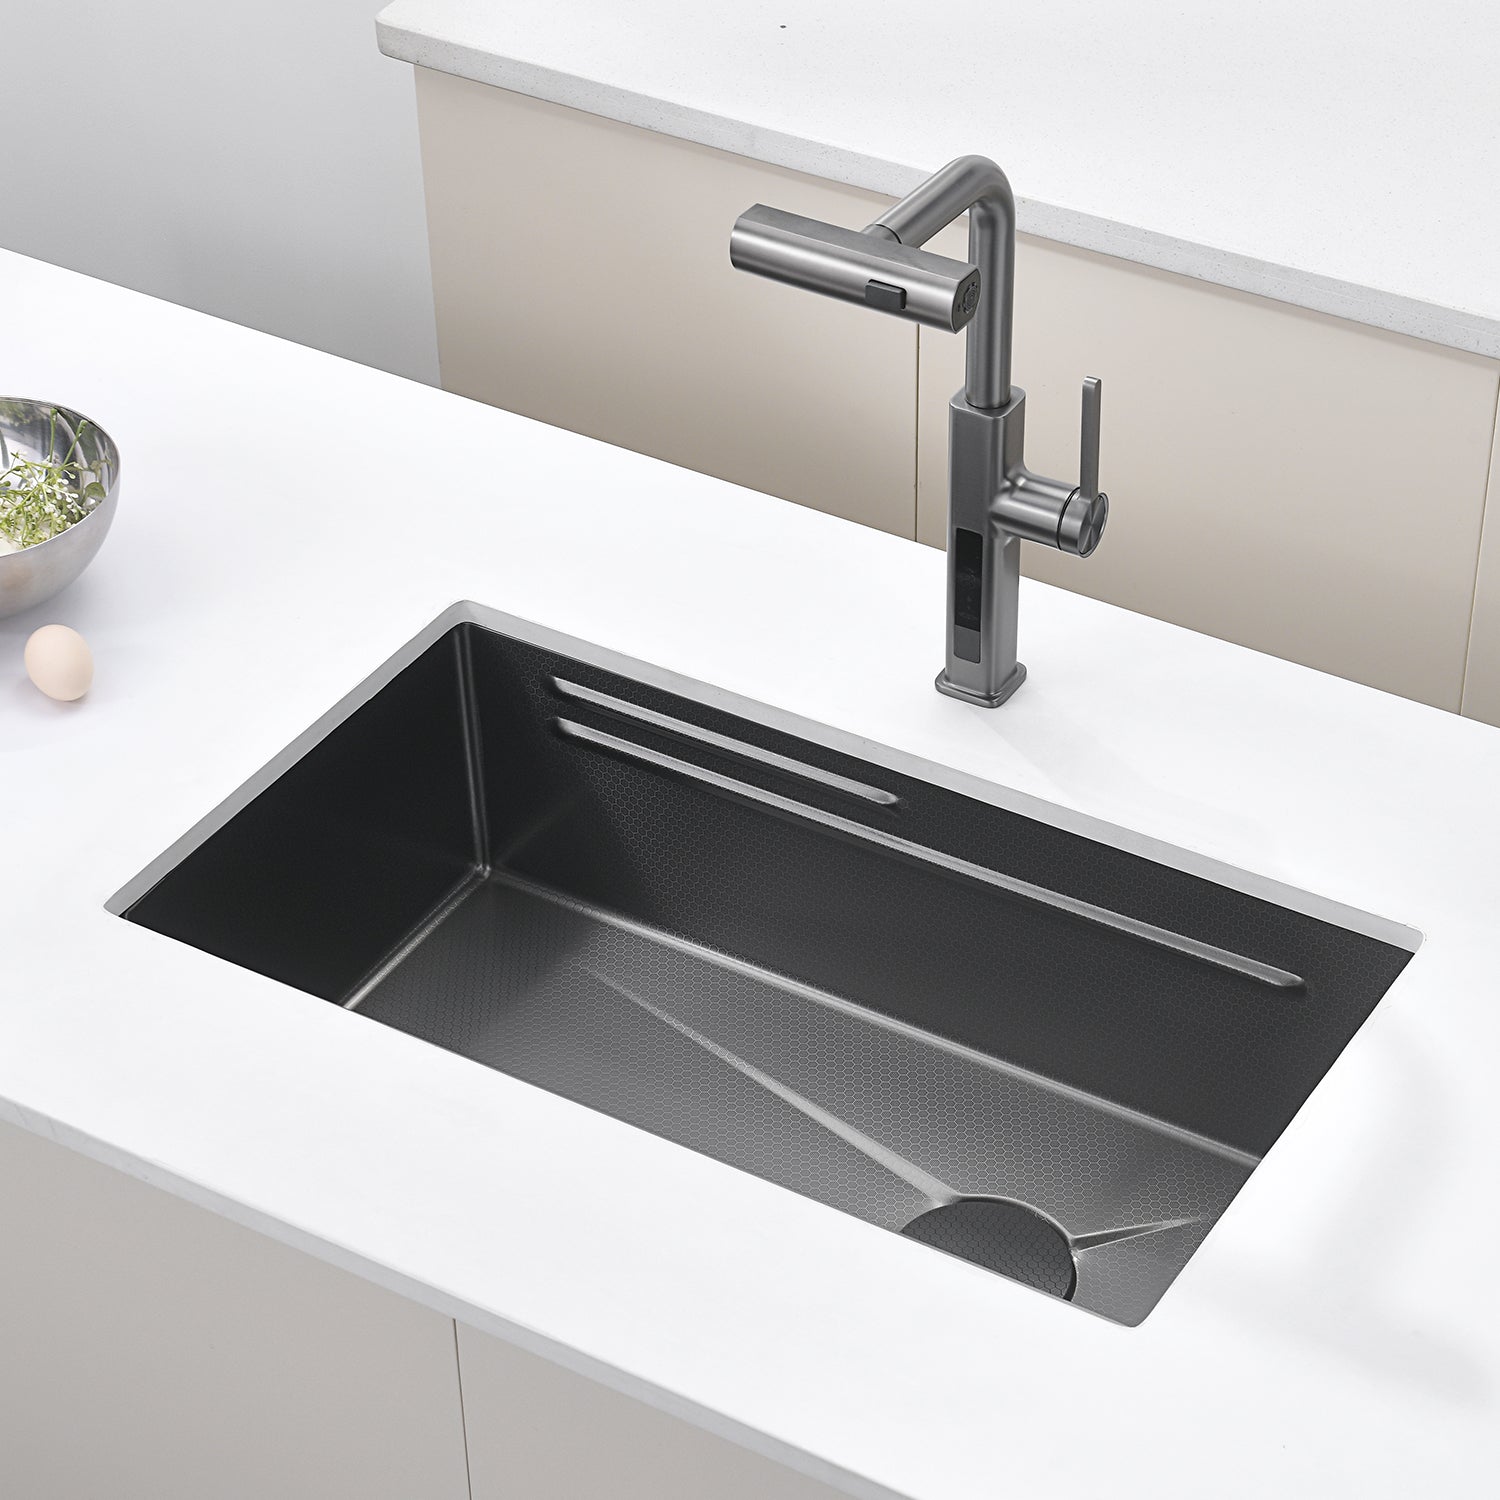 Lefton KS2201 Single Bowl Stainless Steel Drop-In Undermount Kitchen Sink Grey